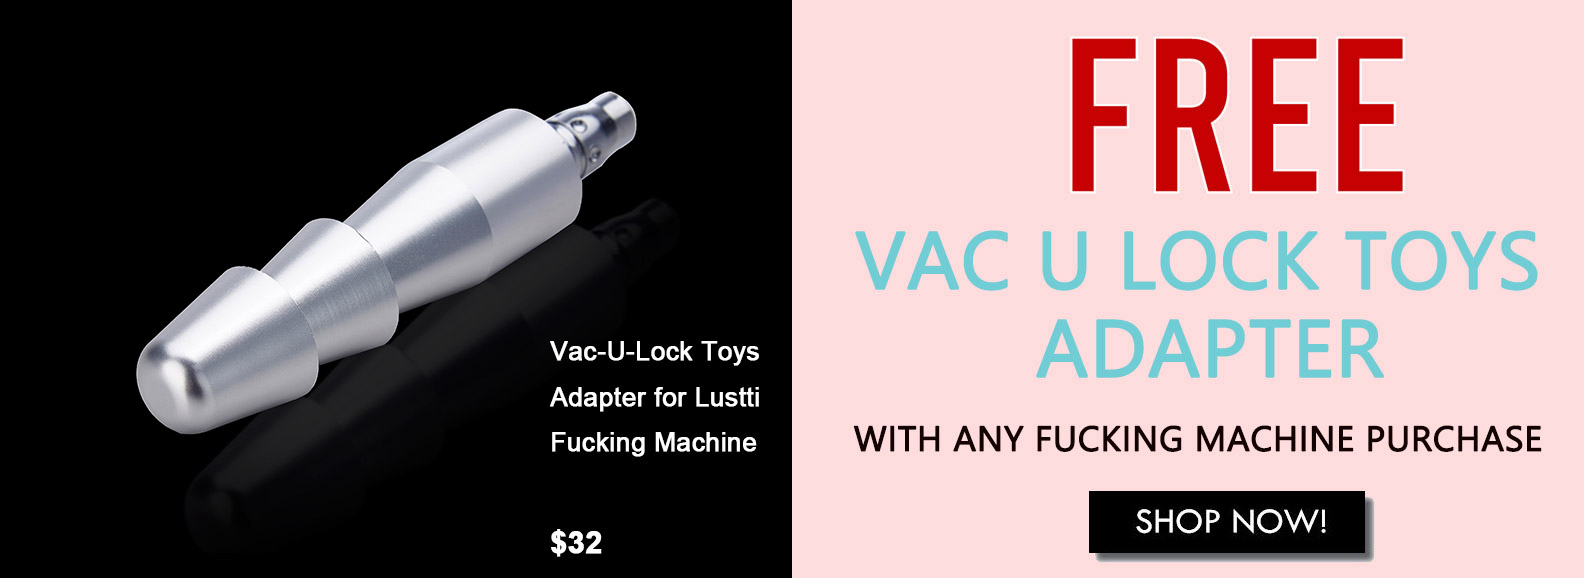 Vac U Lock Toys Adapter for Lustti Fucking Machine